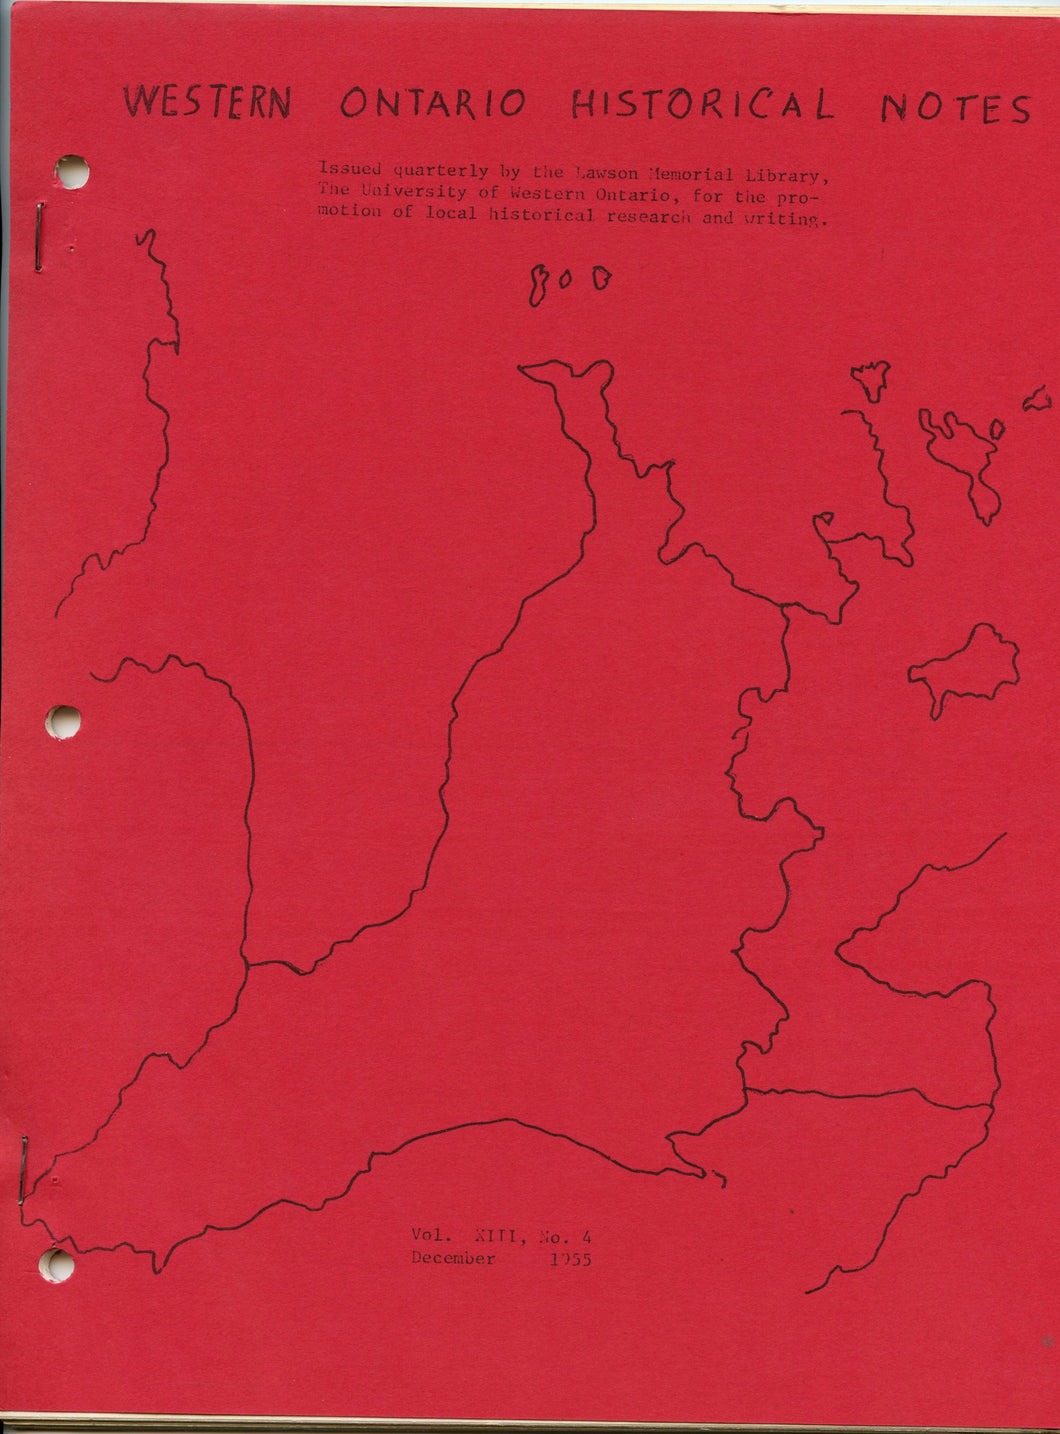 Western Ontario Historical Notes December 1955